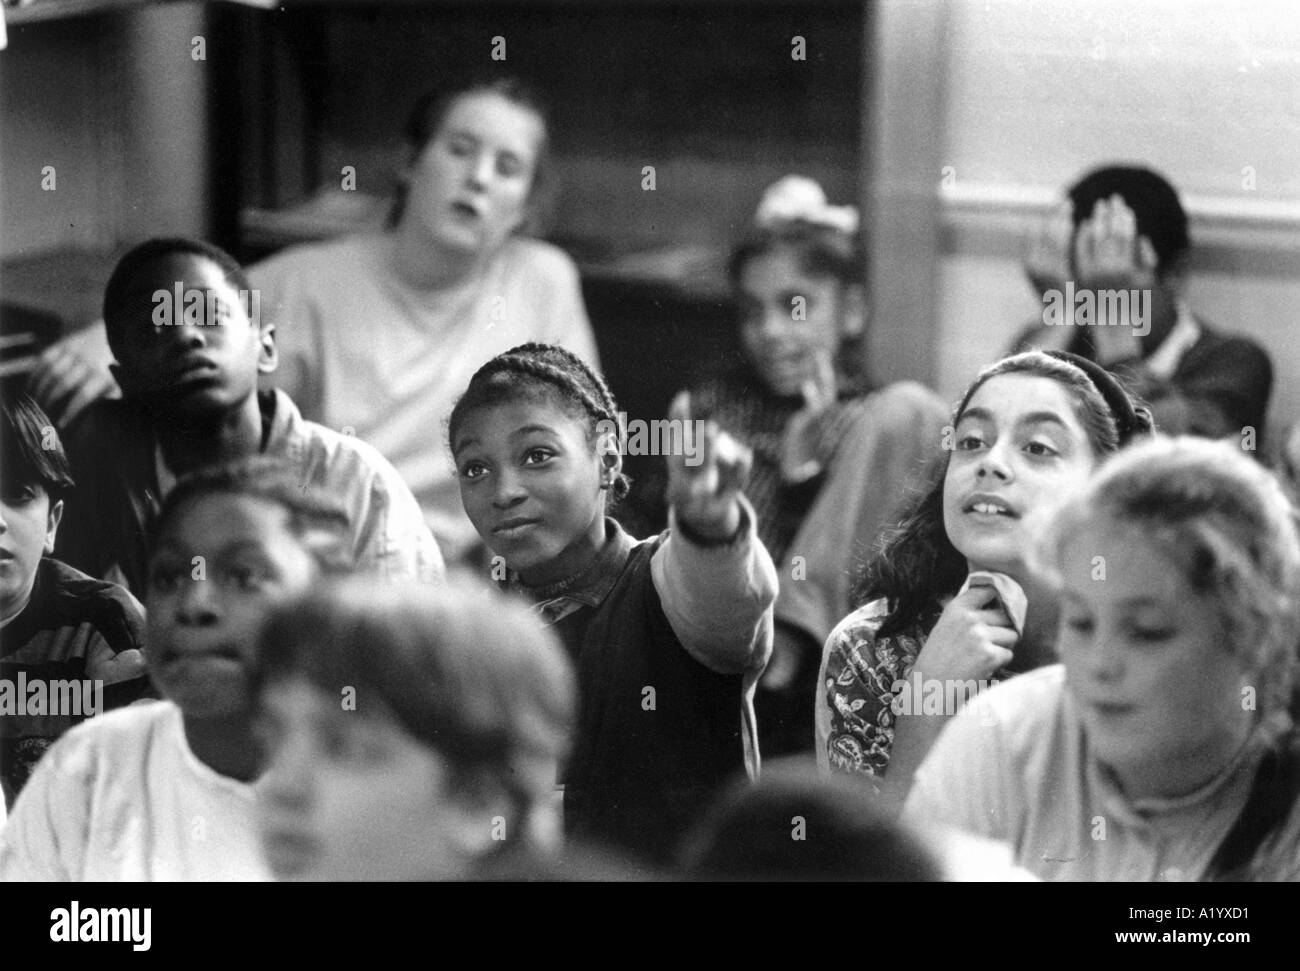 John Sturrock Network Photographers Image Ref JSA 10113856 1990 Hackney School class Classroom Stock Photo